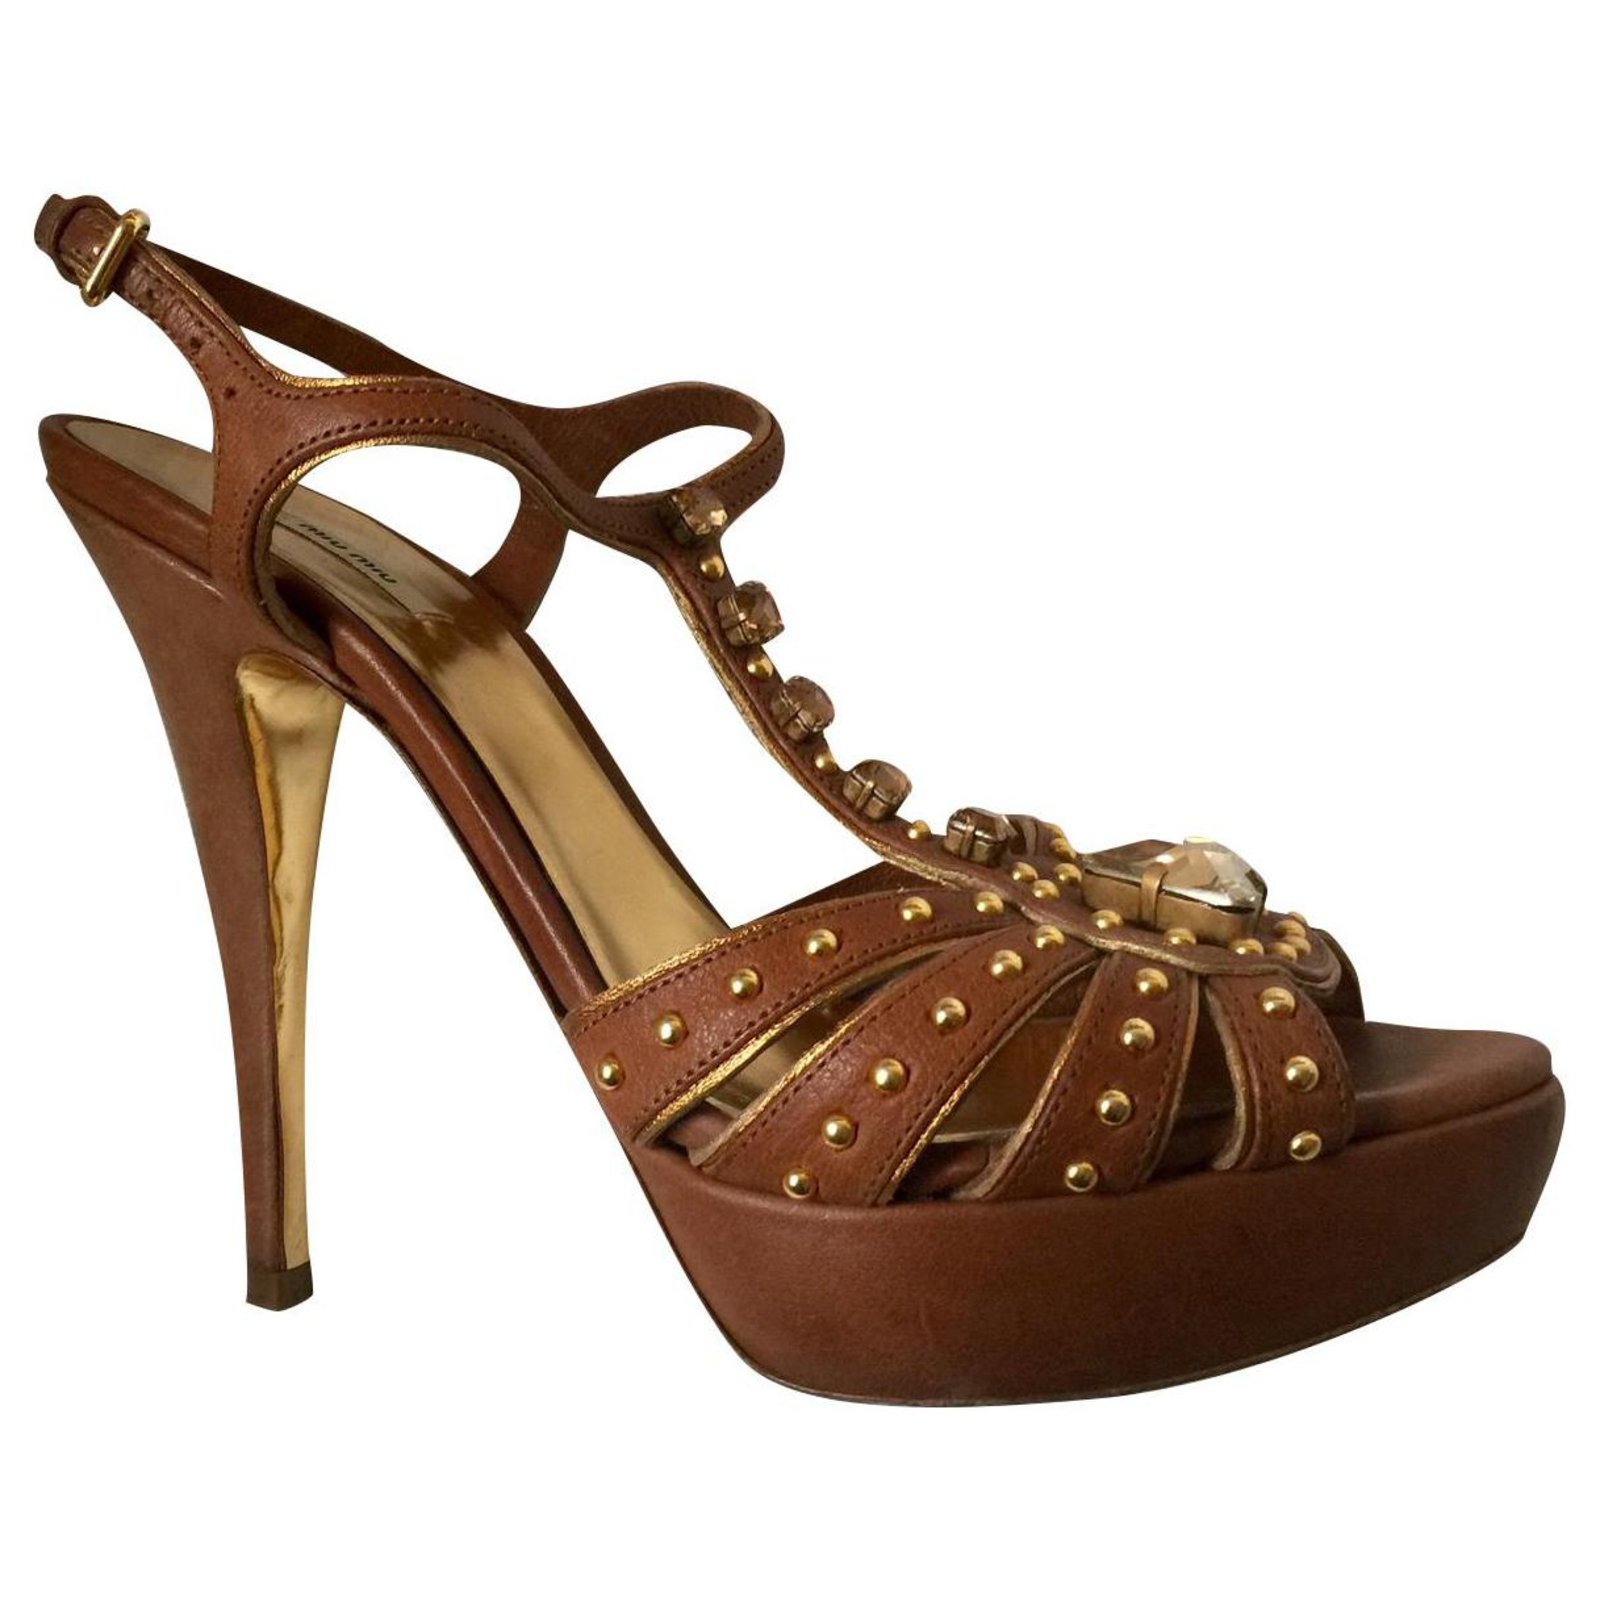 Caelia Ankle Lace Up Platform Sandal in Brown Multi – Jessica Simpson